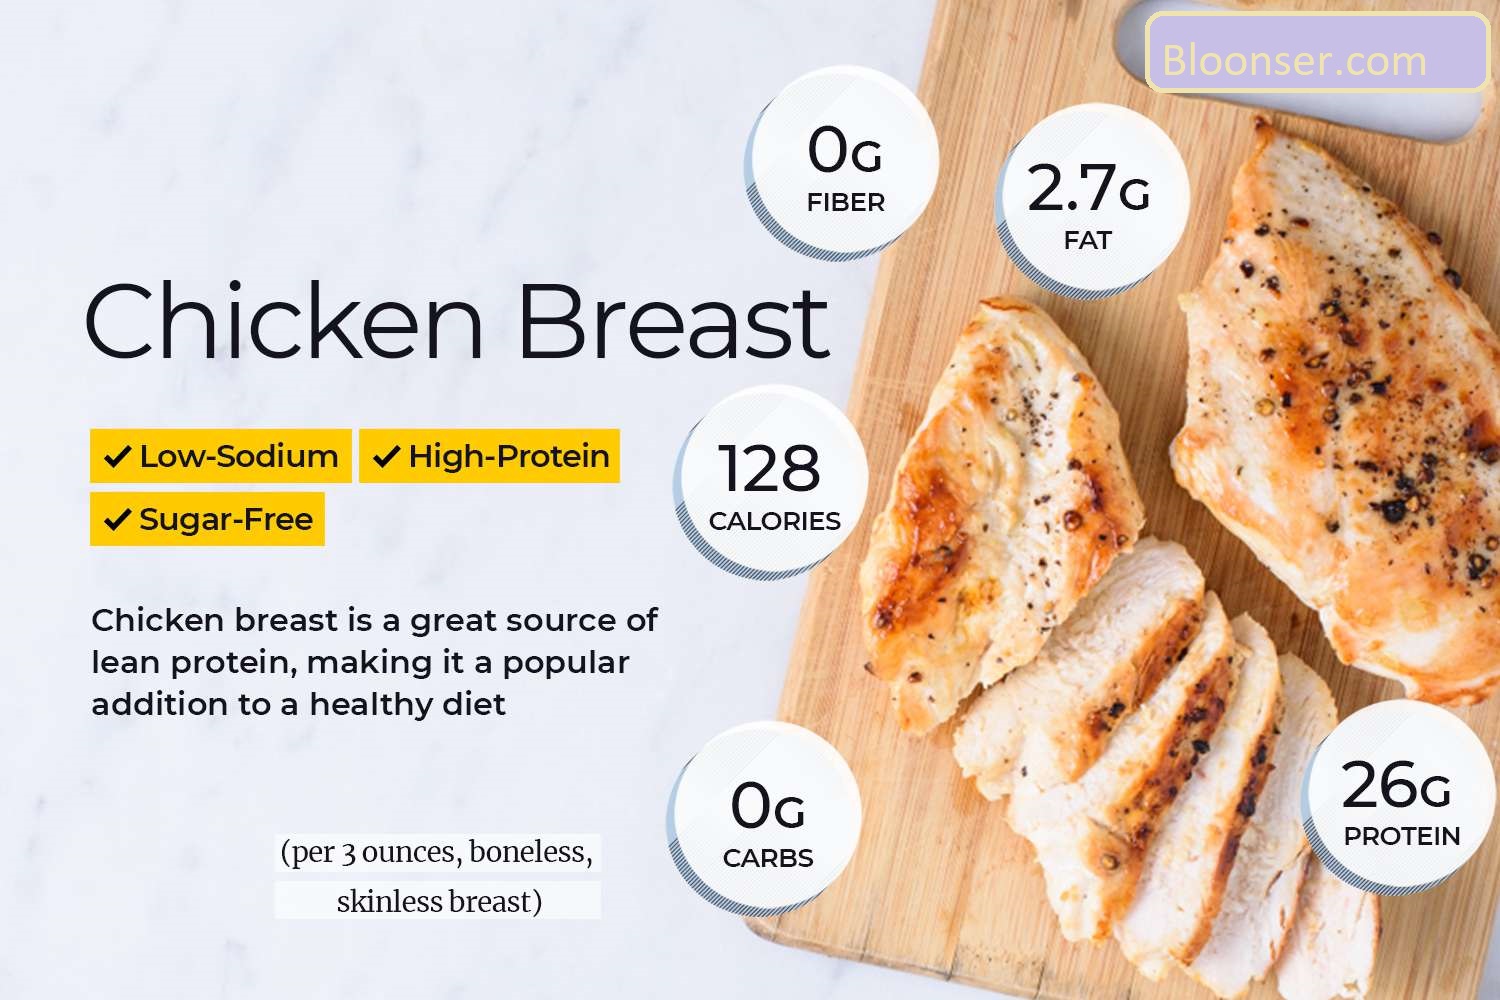 Chicken breast calories